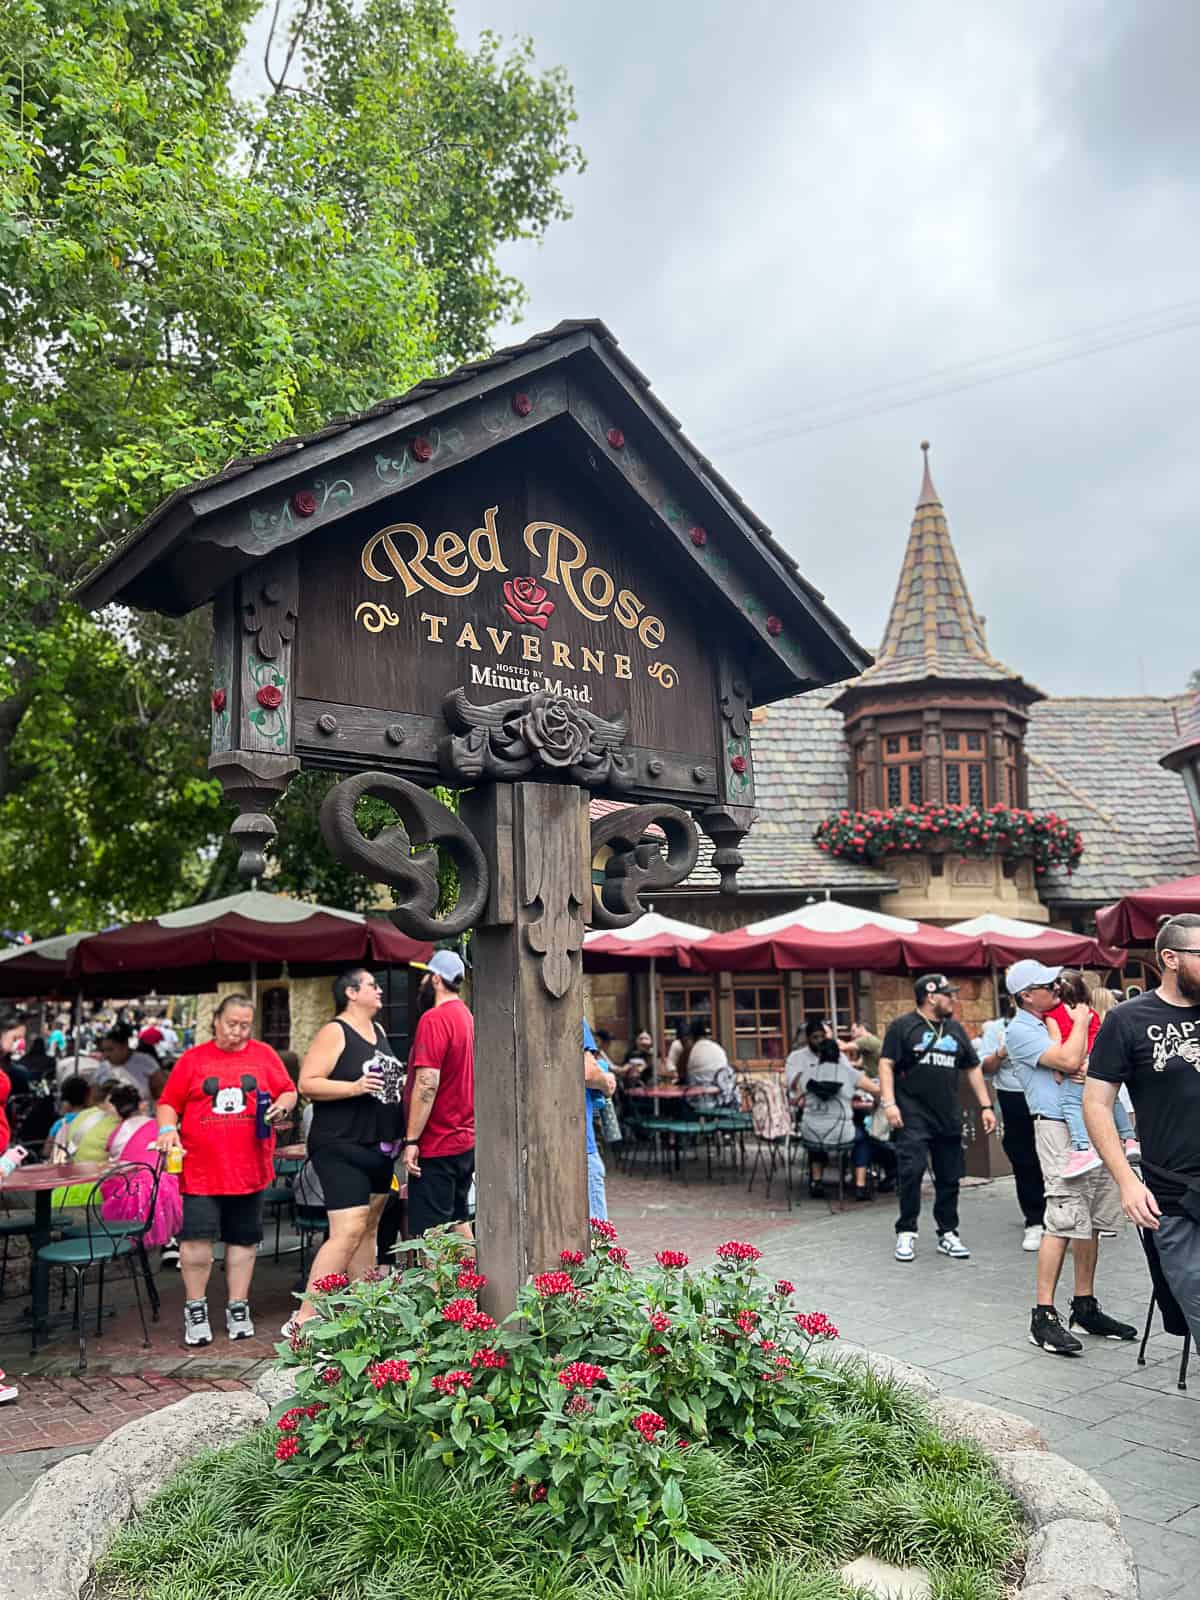 Red Rose Tavern in the Fantasyland area of Disneyland Park